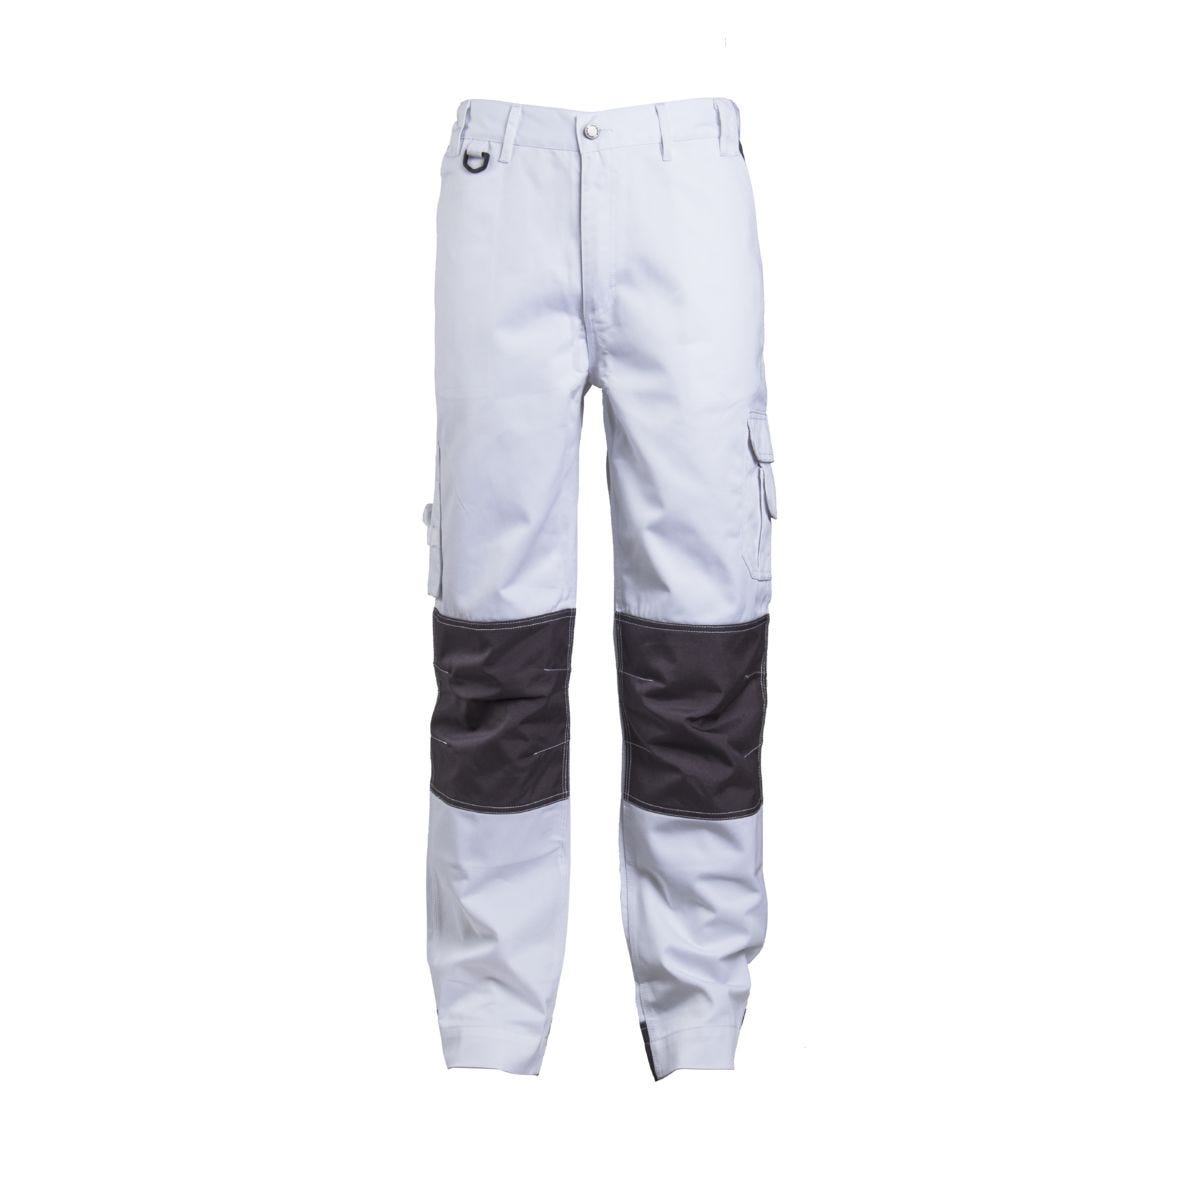 Pantalon CLASS blanc - COVERGUARD - Taille 2XL 0